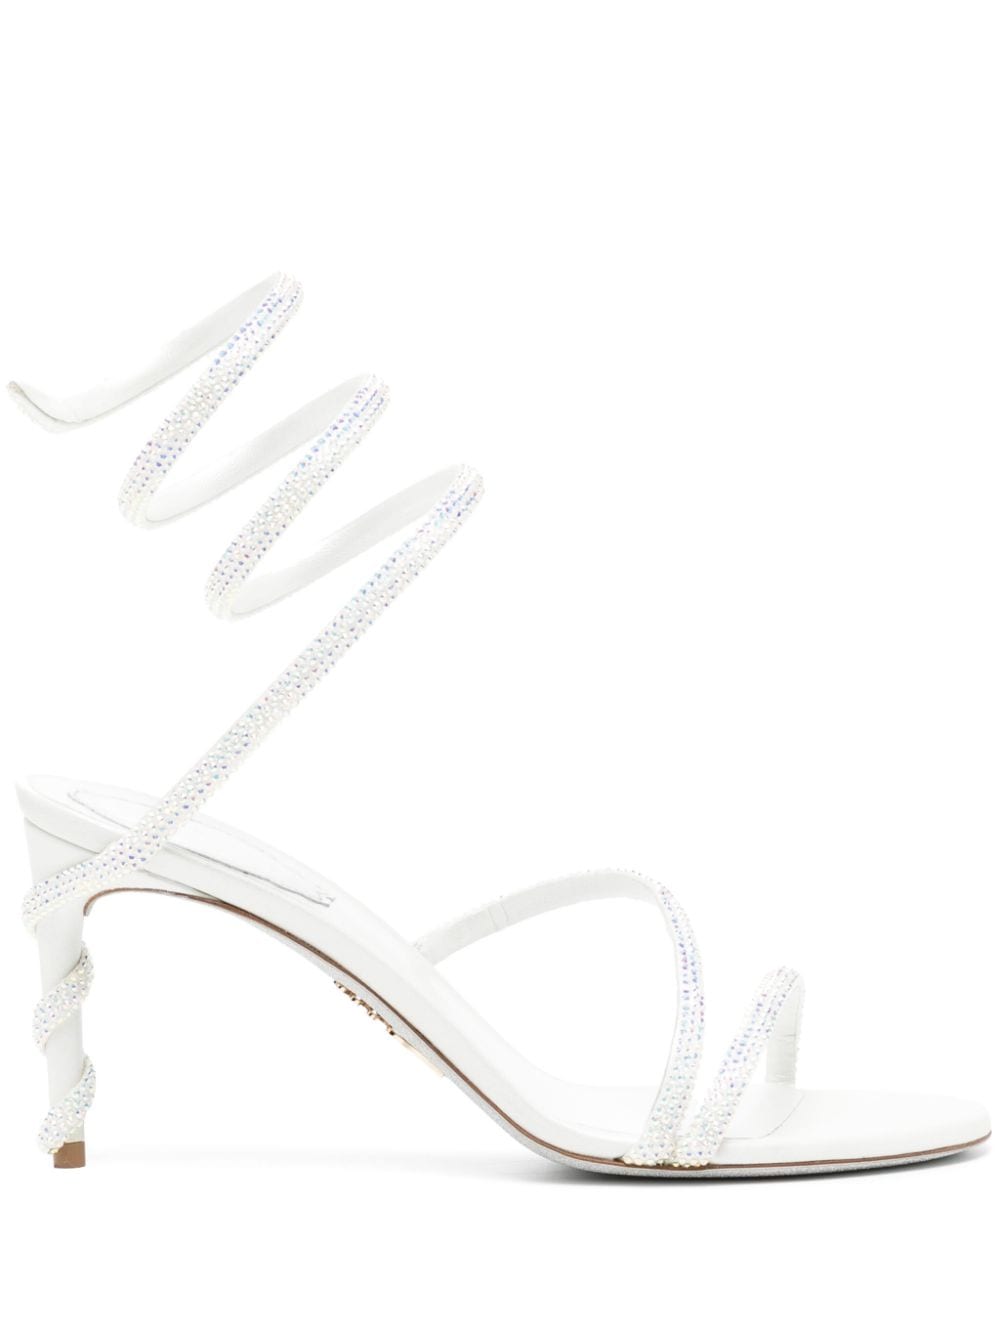 René Caovilla Margot embellished leather sandals - White von René Caovilla